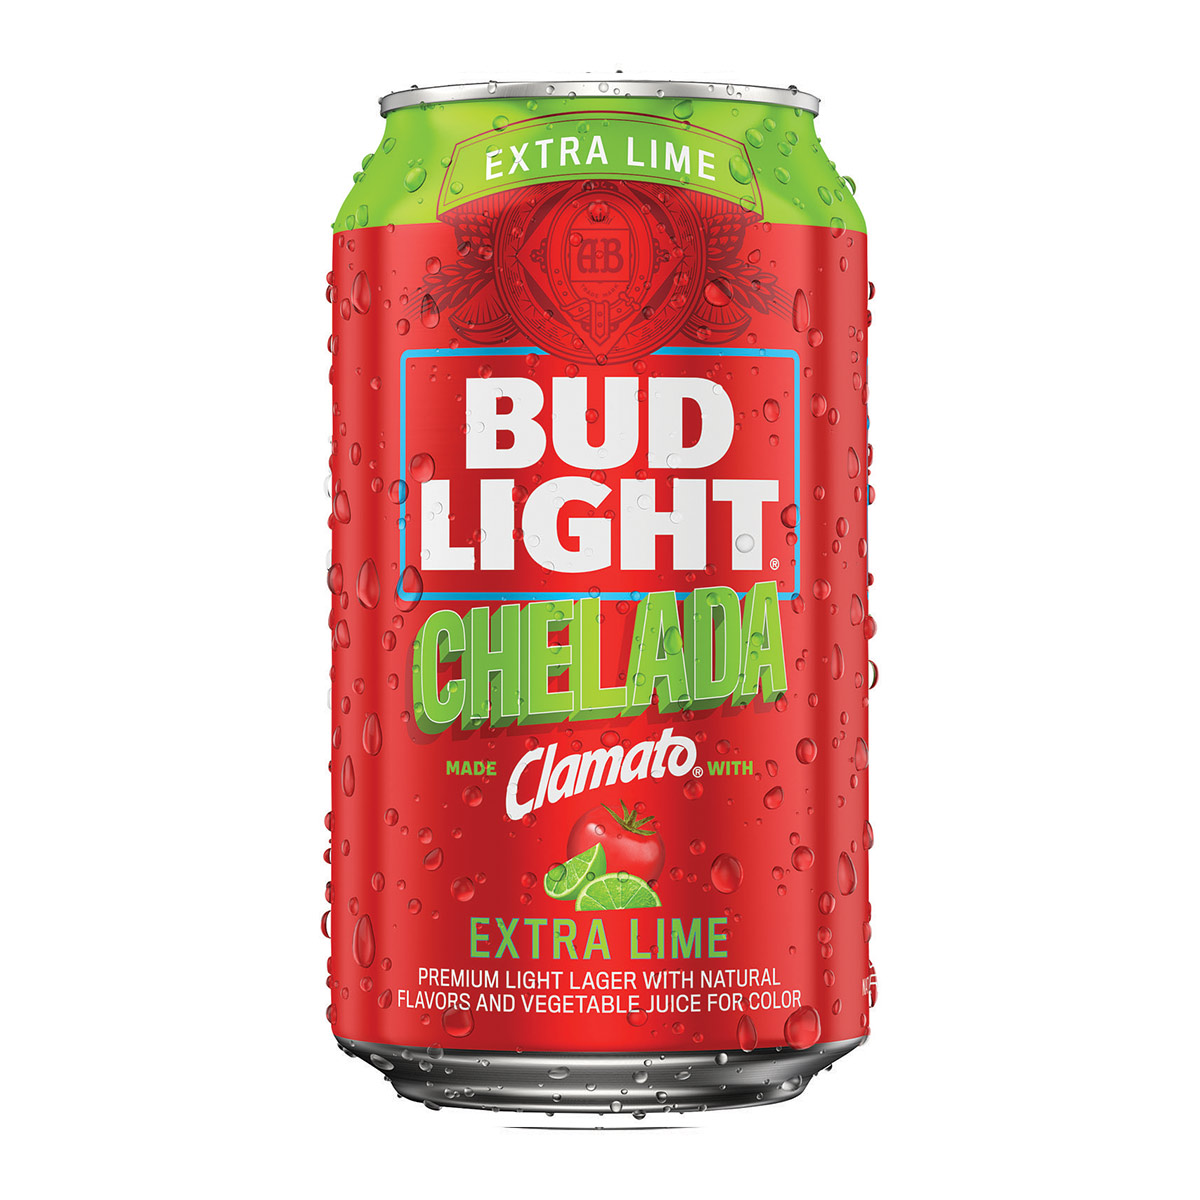 Bud Light Chelada Extra Lime